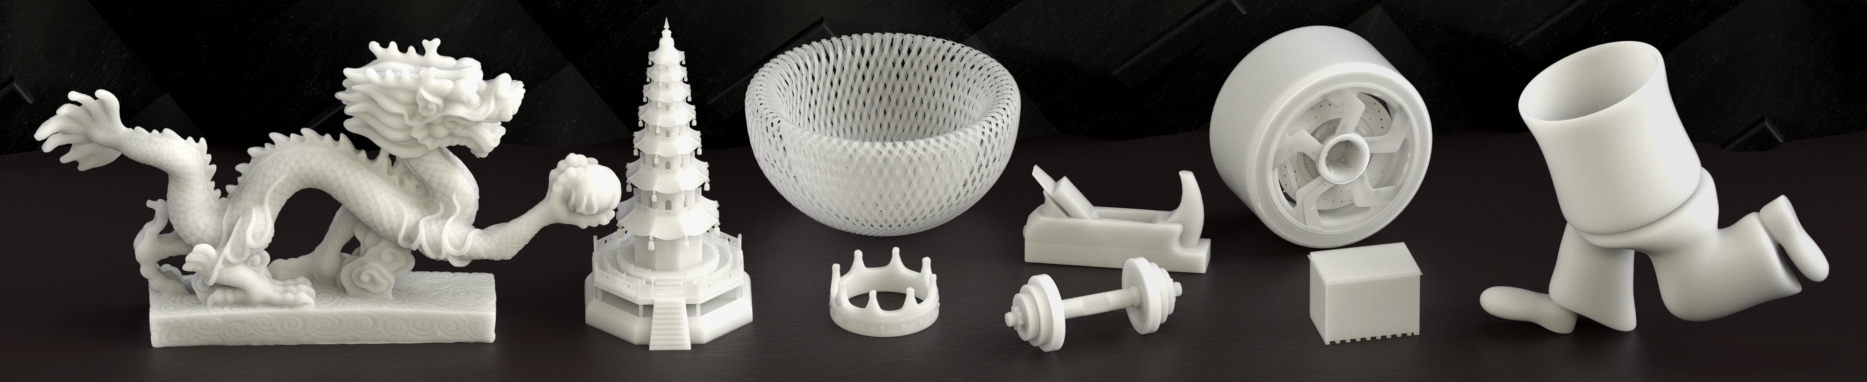 Онлайн-сервисы 3D-печати